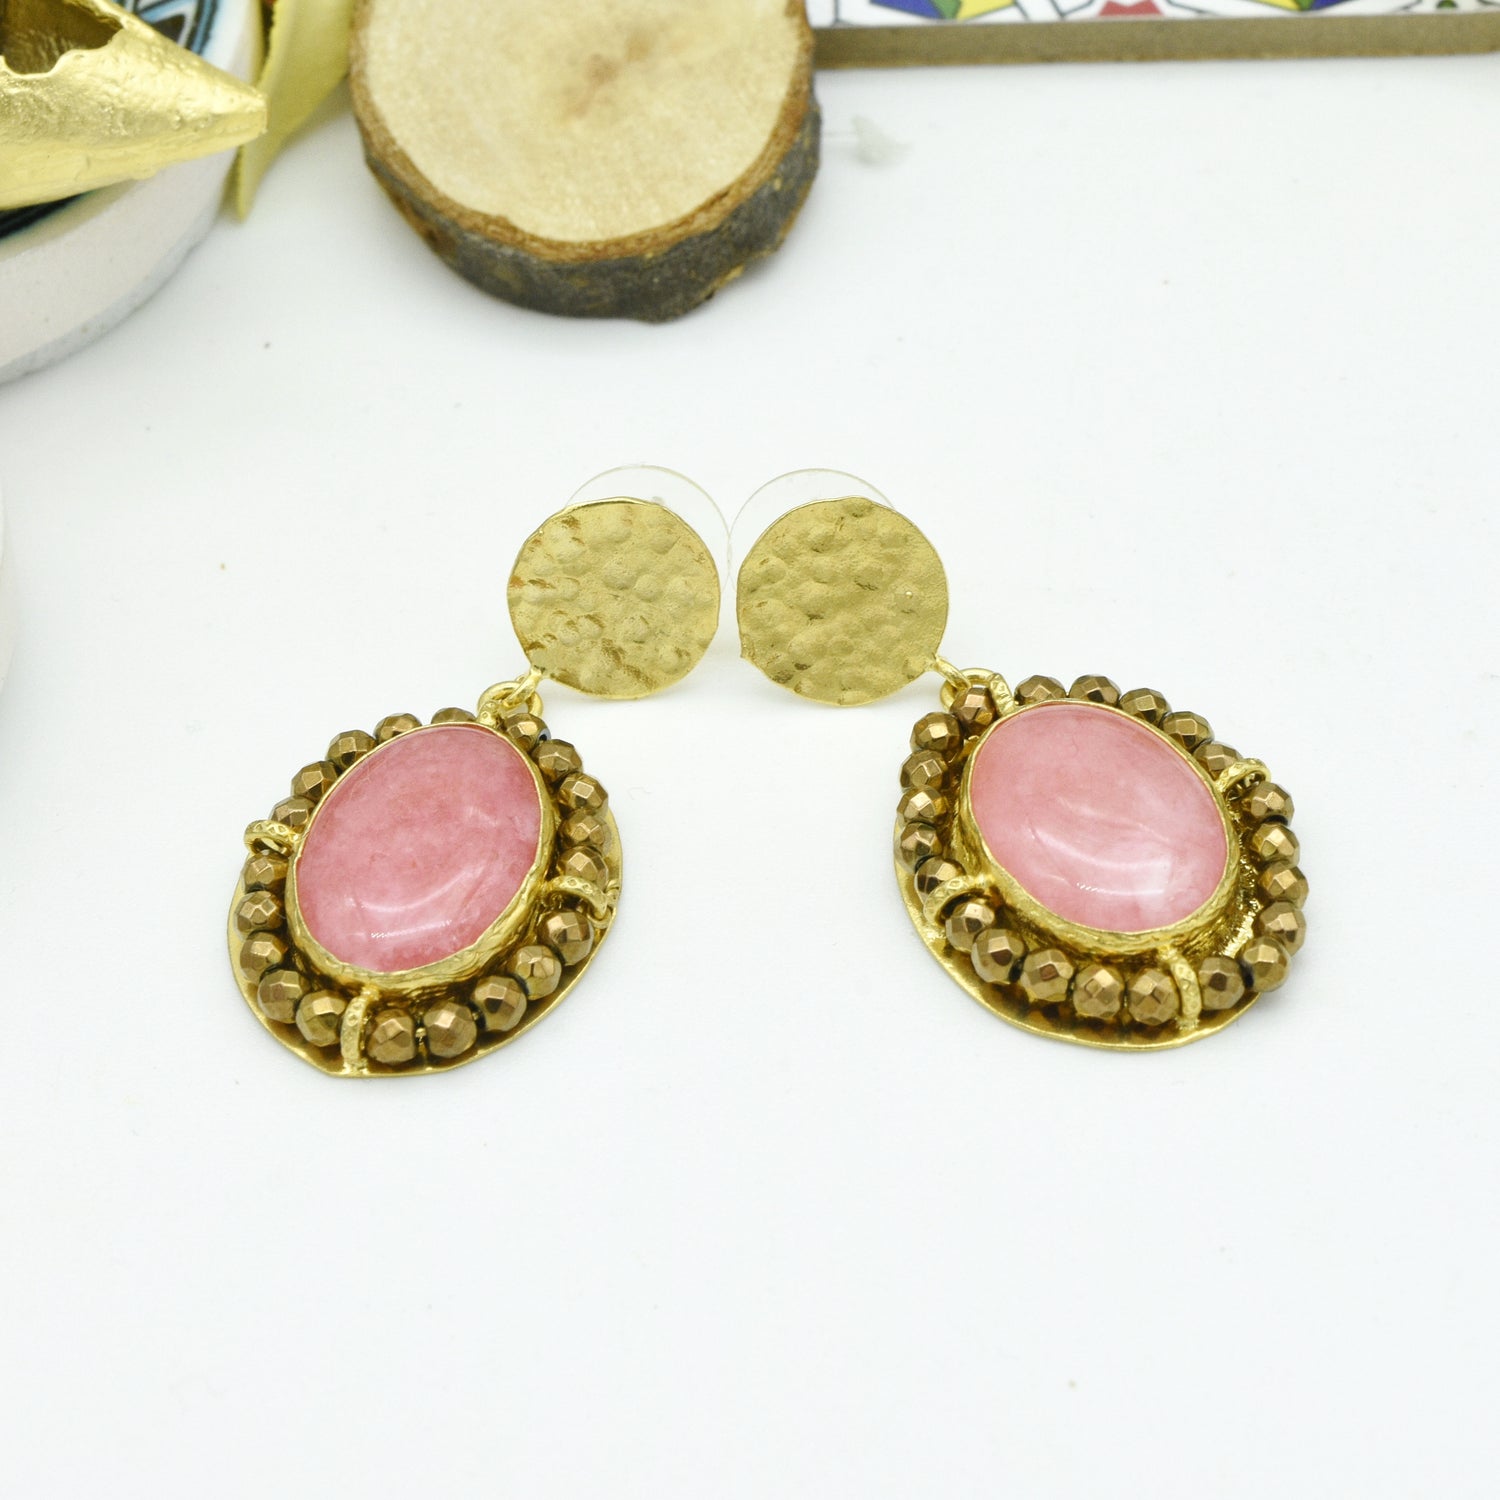 Aylas Hemitite, Agate semi precious gemstone earrings - 21ct Gold plated Handmade